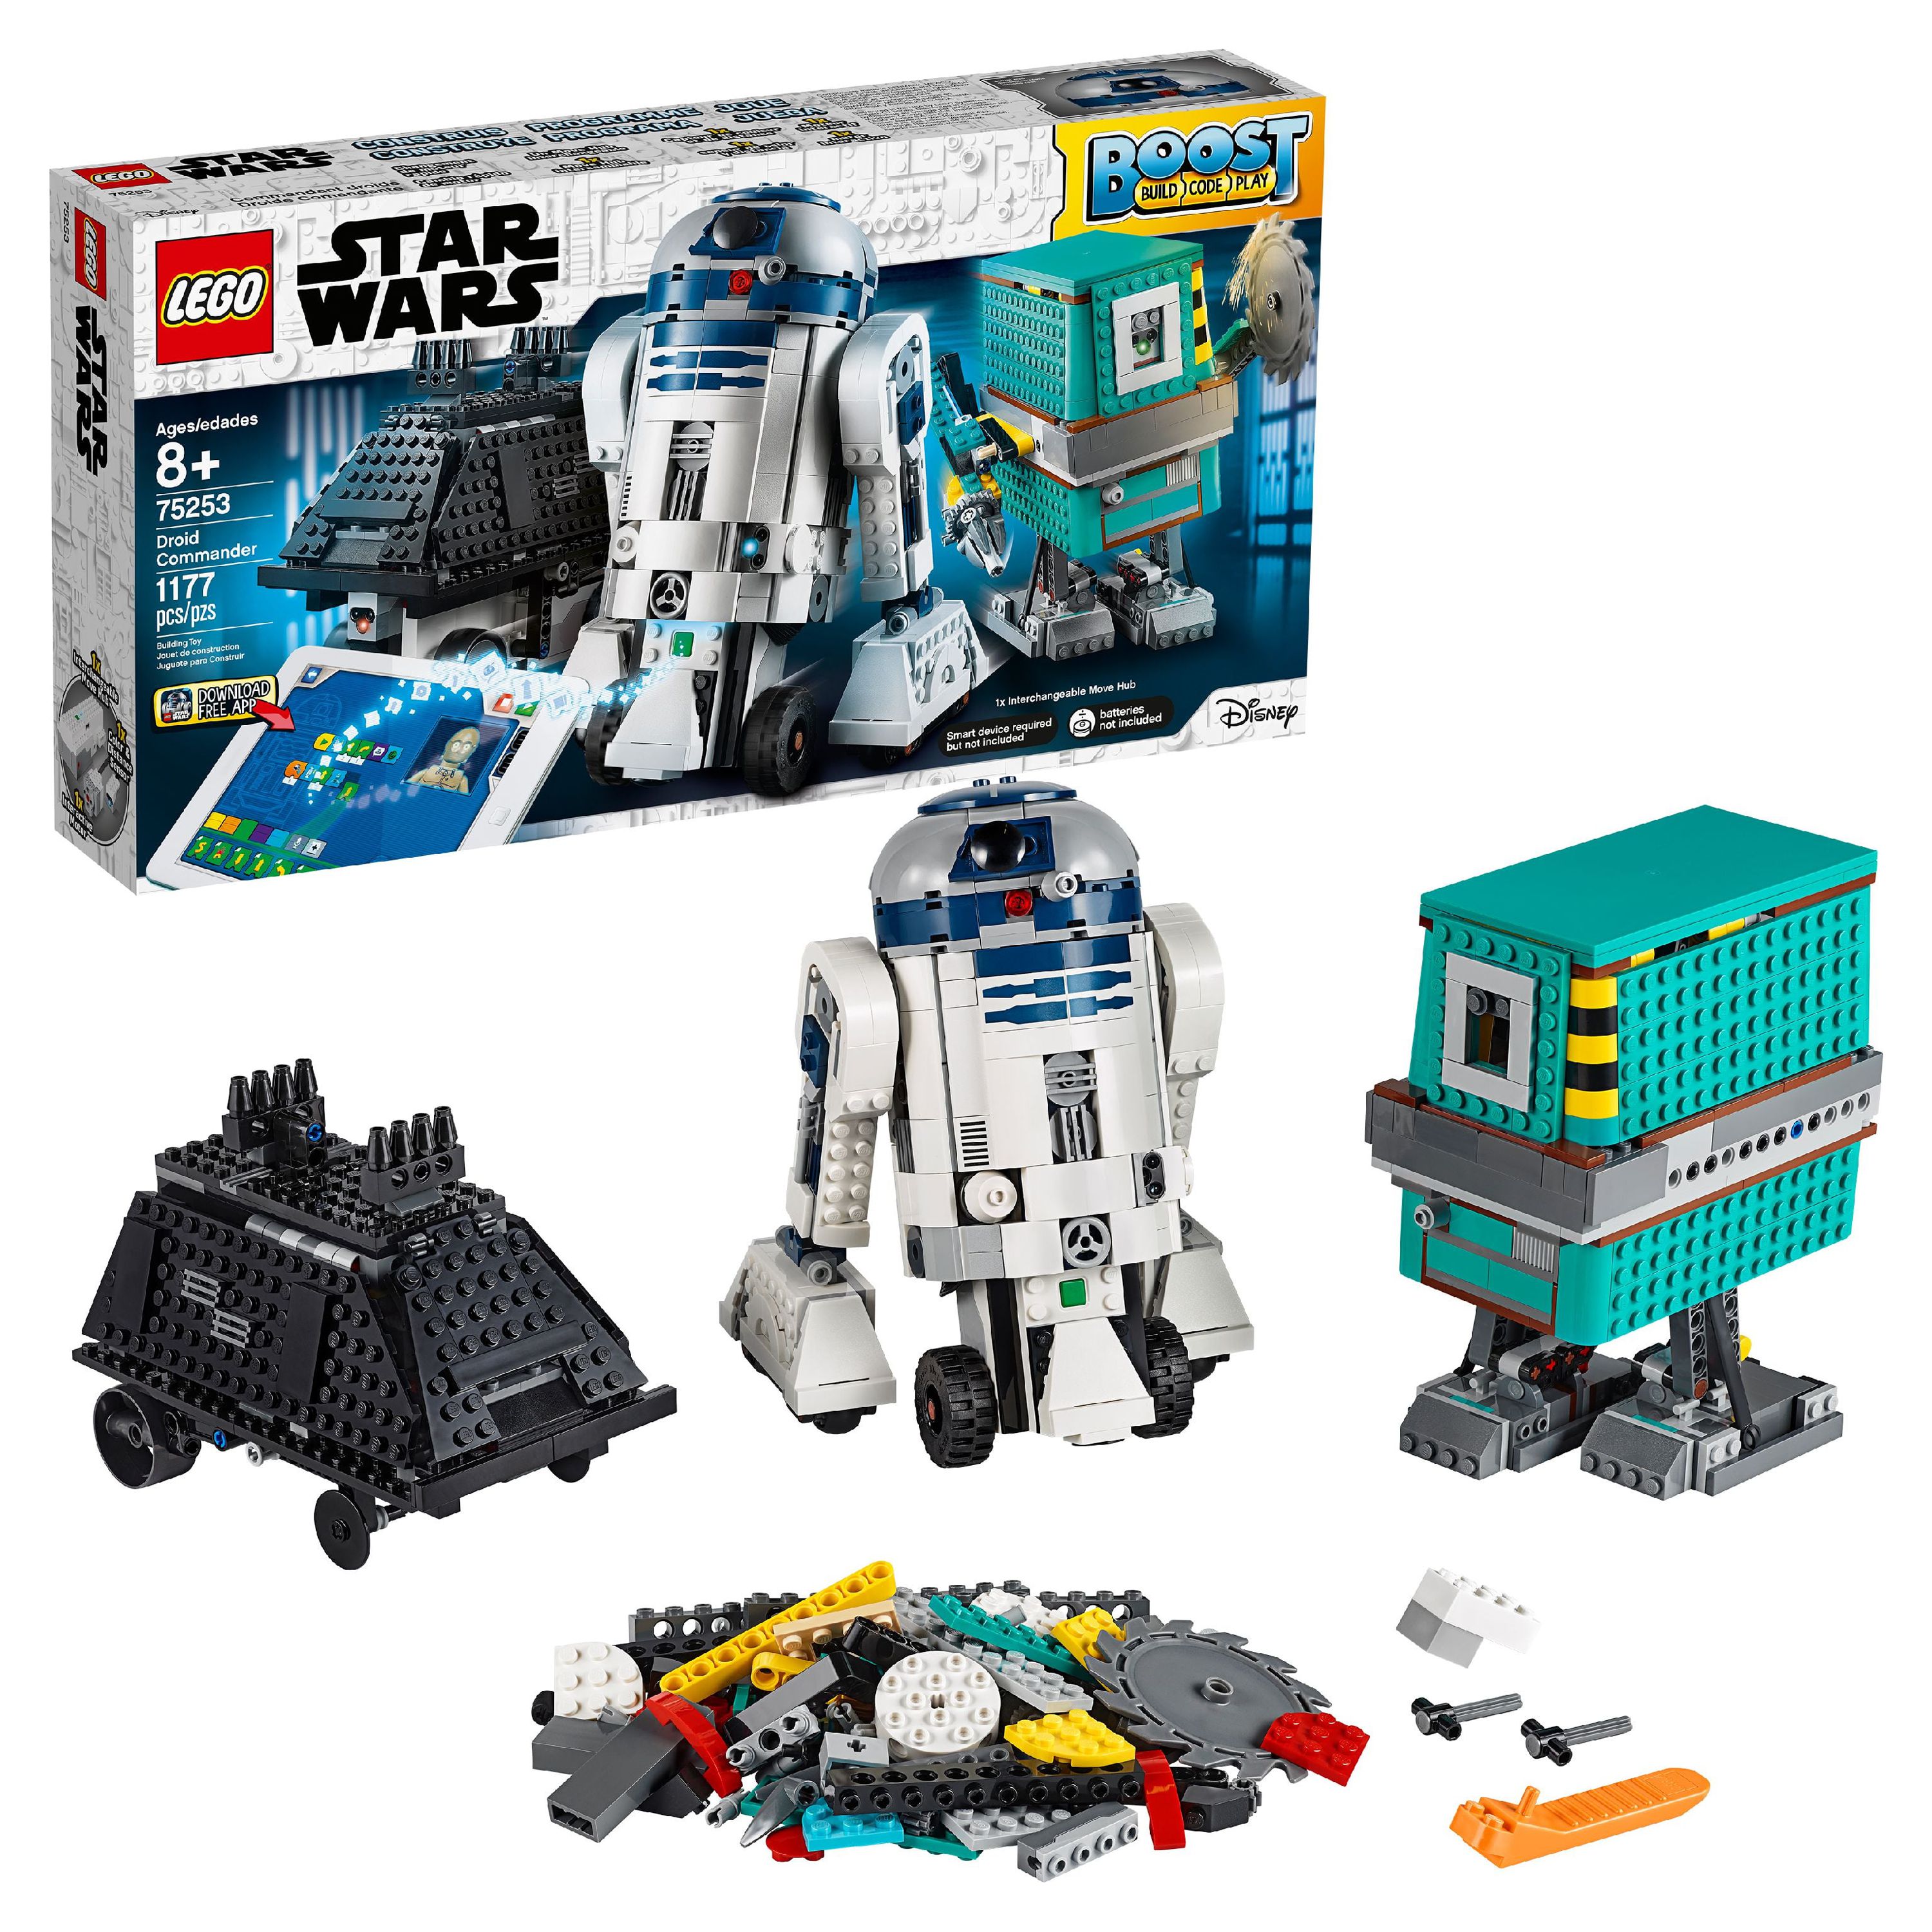 LEGO 75253 Star Wars Boost Droid Commander STEM Coding Educational Building Set for Kids - image 1 of 7